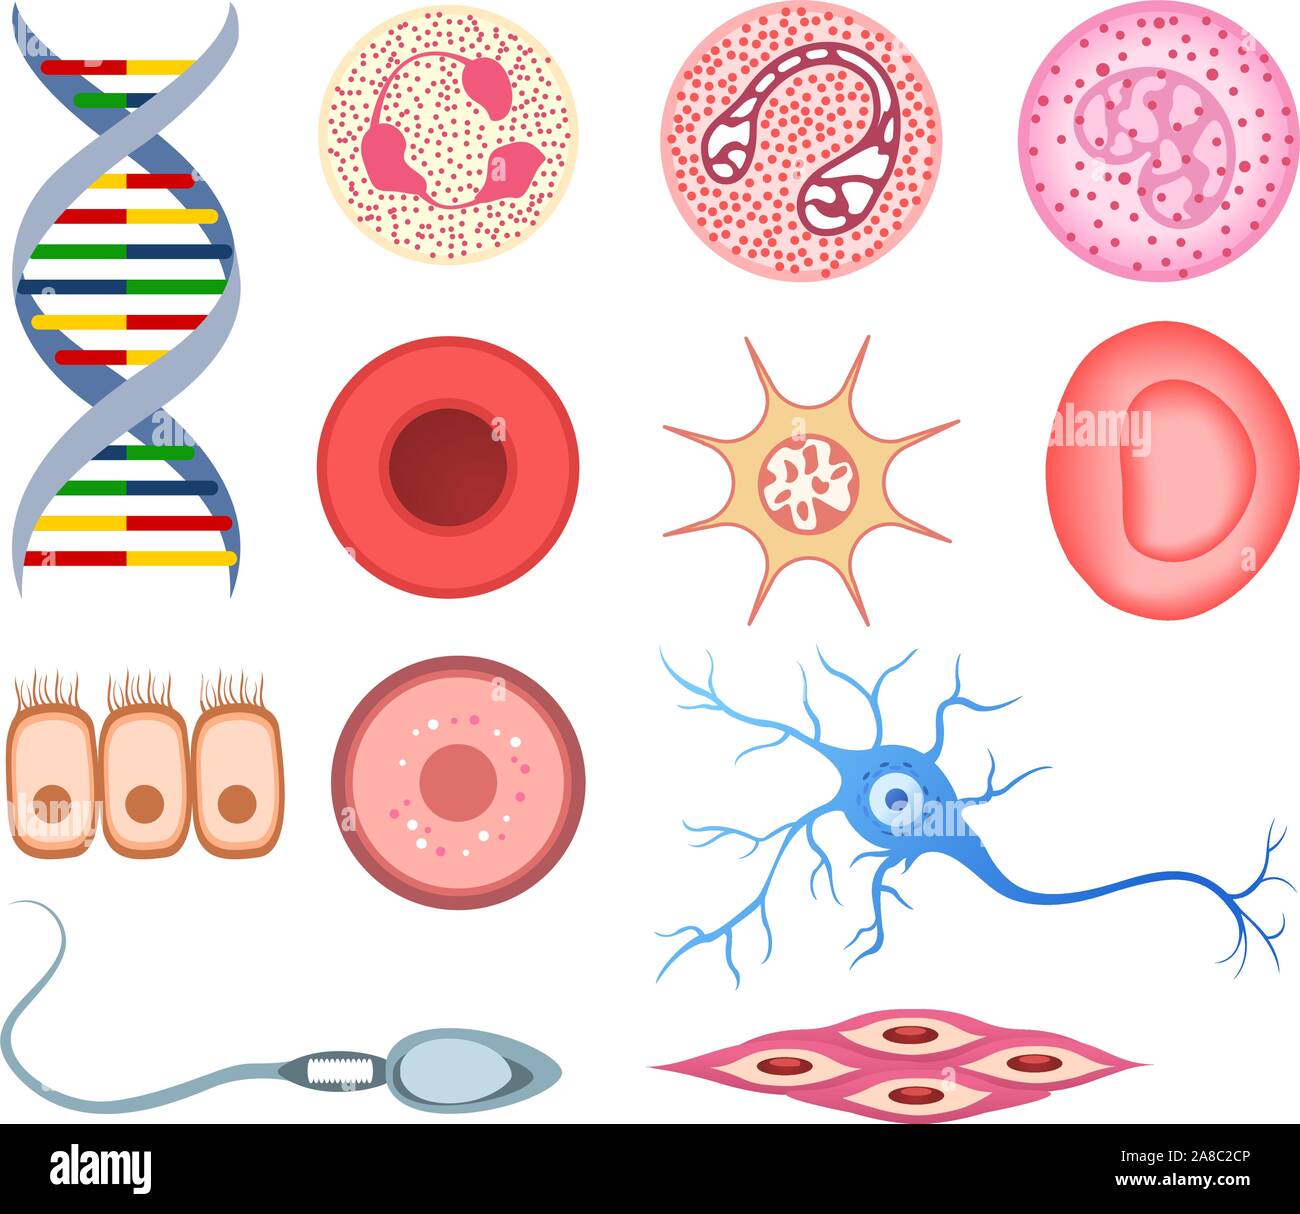 Menschliche Zellen, mit DNA, Blutzellen, Hautzellen, Knochen Zelle, säulig Epithelzellen und Becherzellen, Neuron, glatten Muskelzellen, neurale Zellen, Ca Stock Vektor